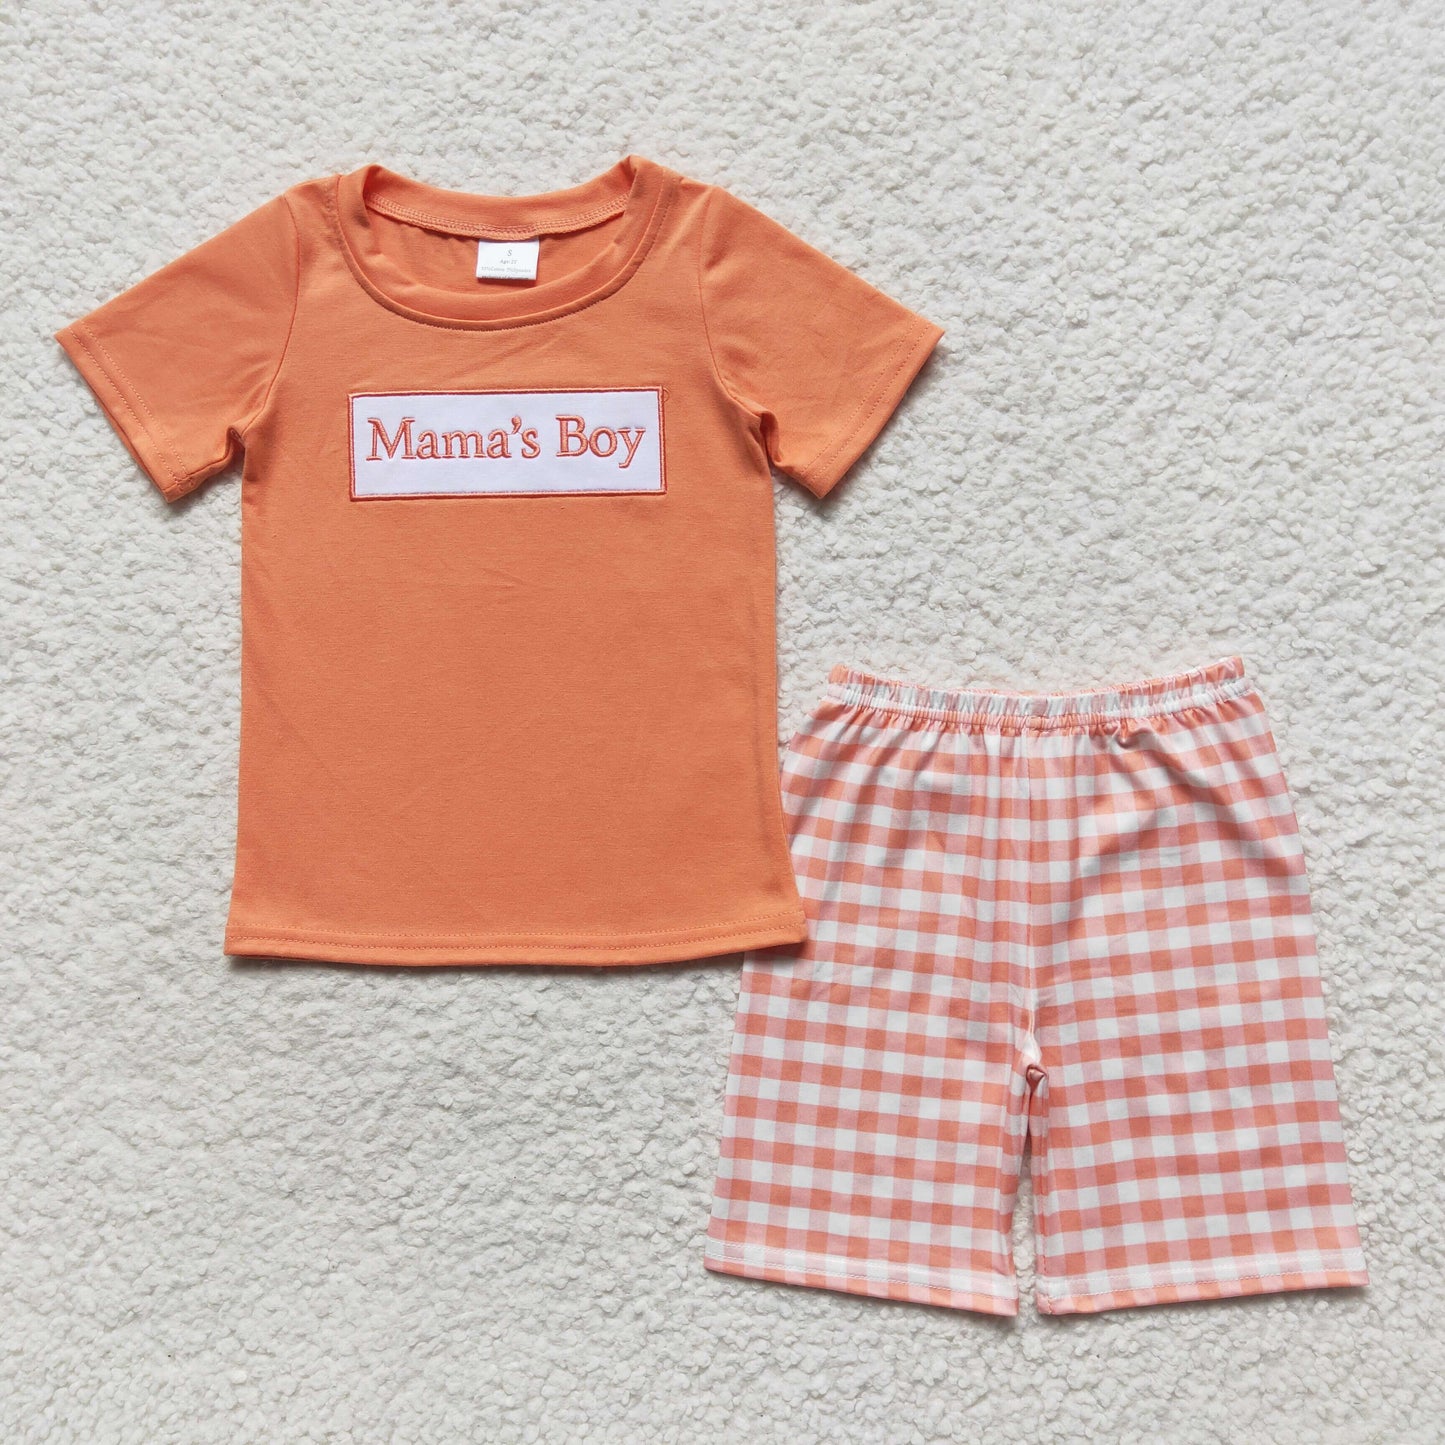 mama's boy embroidery shorts set